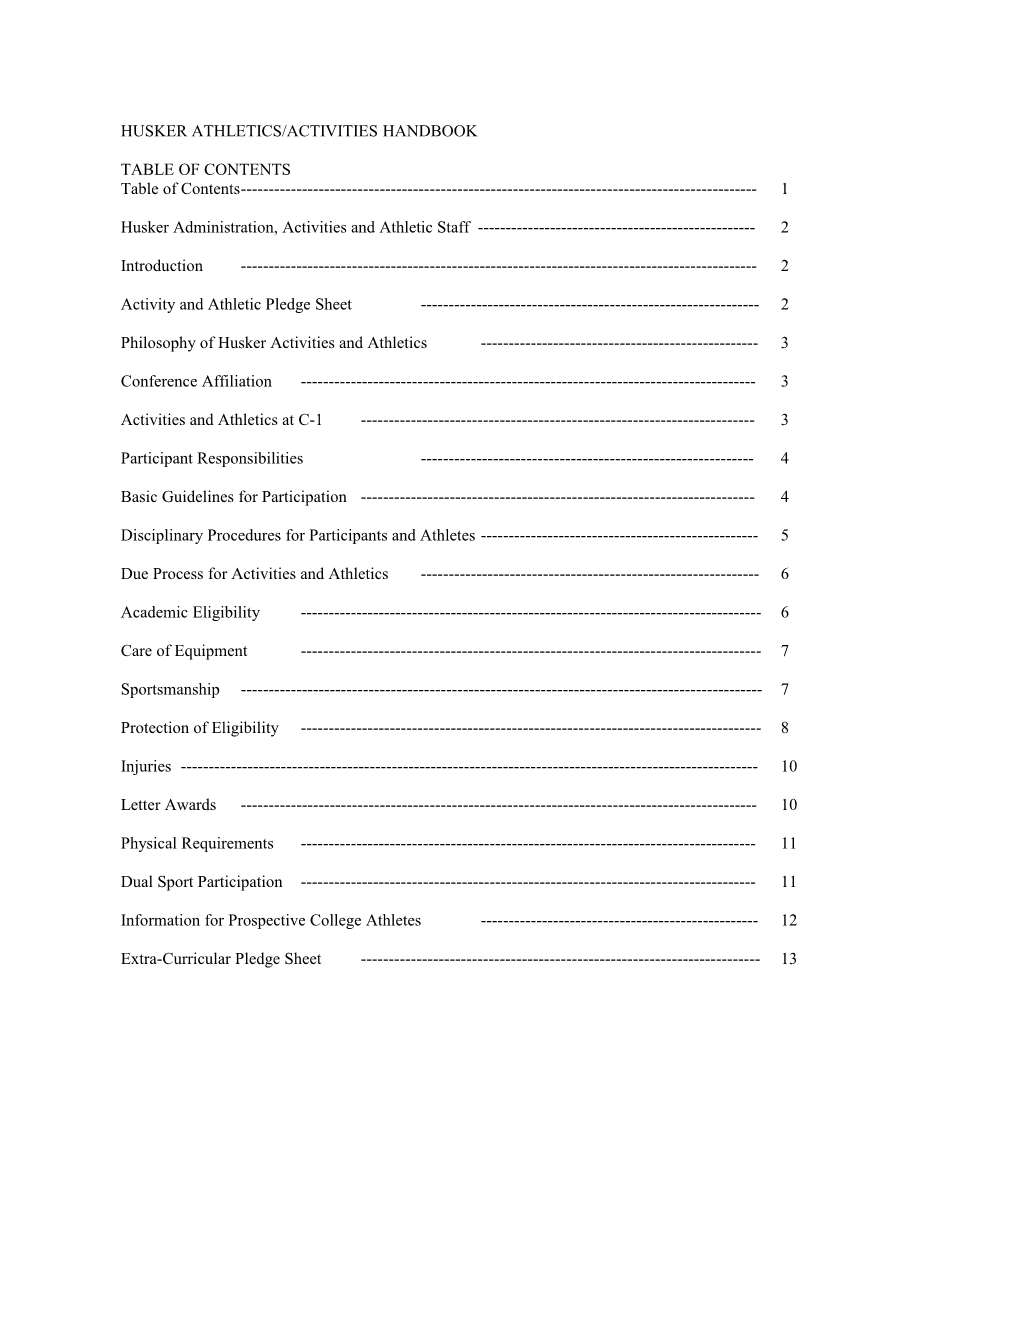 Husker Athletics/Activities Handbook